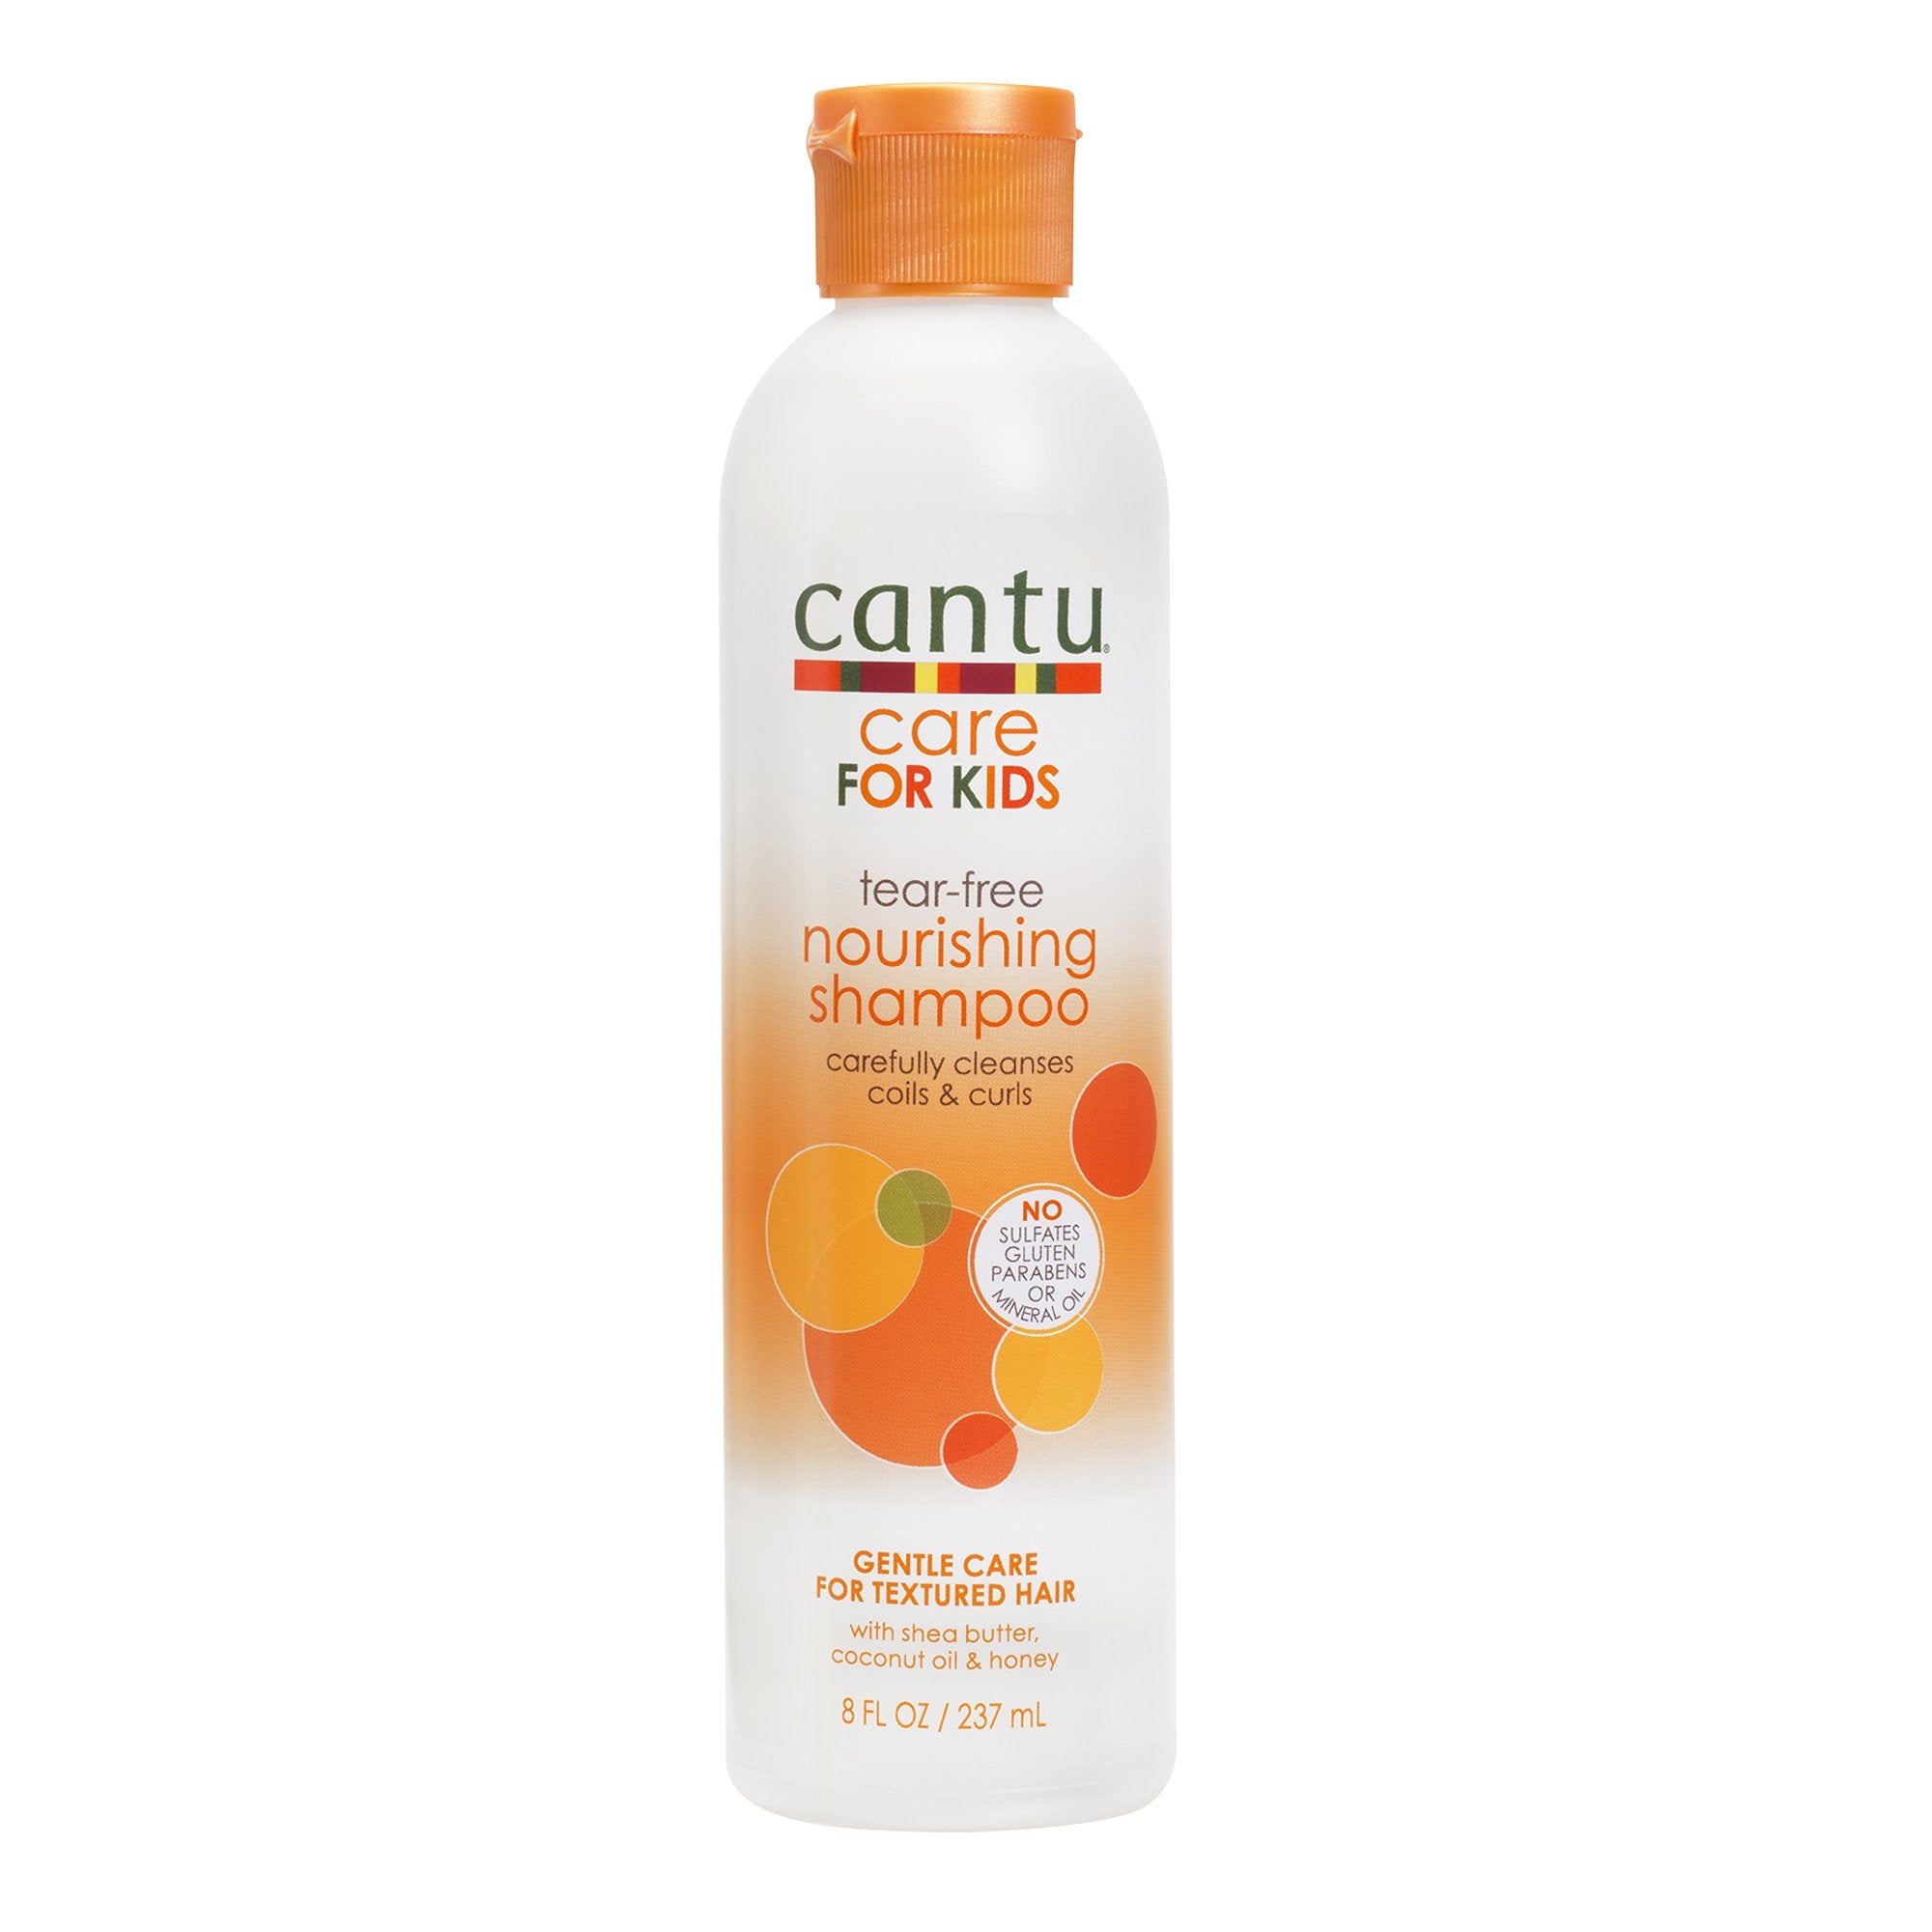 Cantu Care For Kids Tear-Free Nourishing Shampoo 237ml White